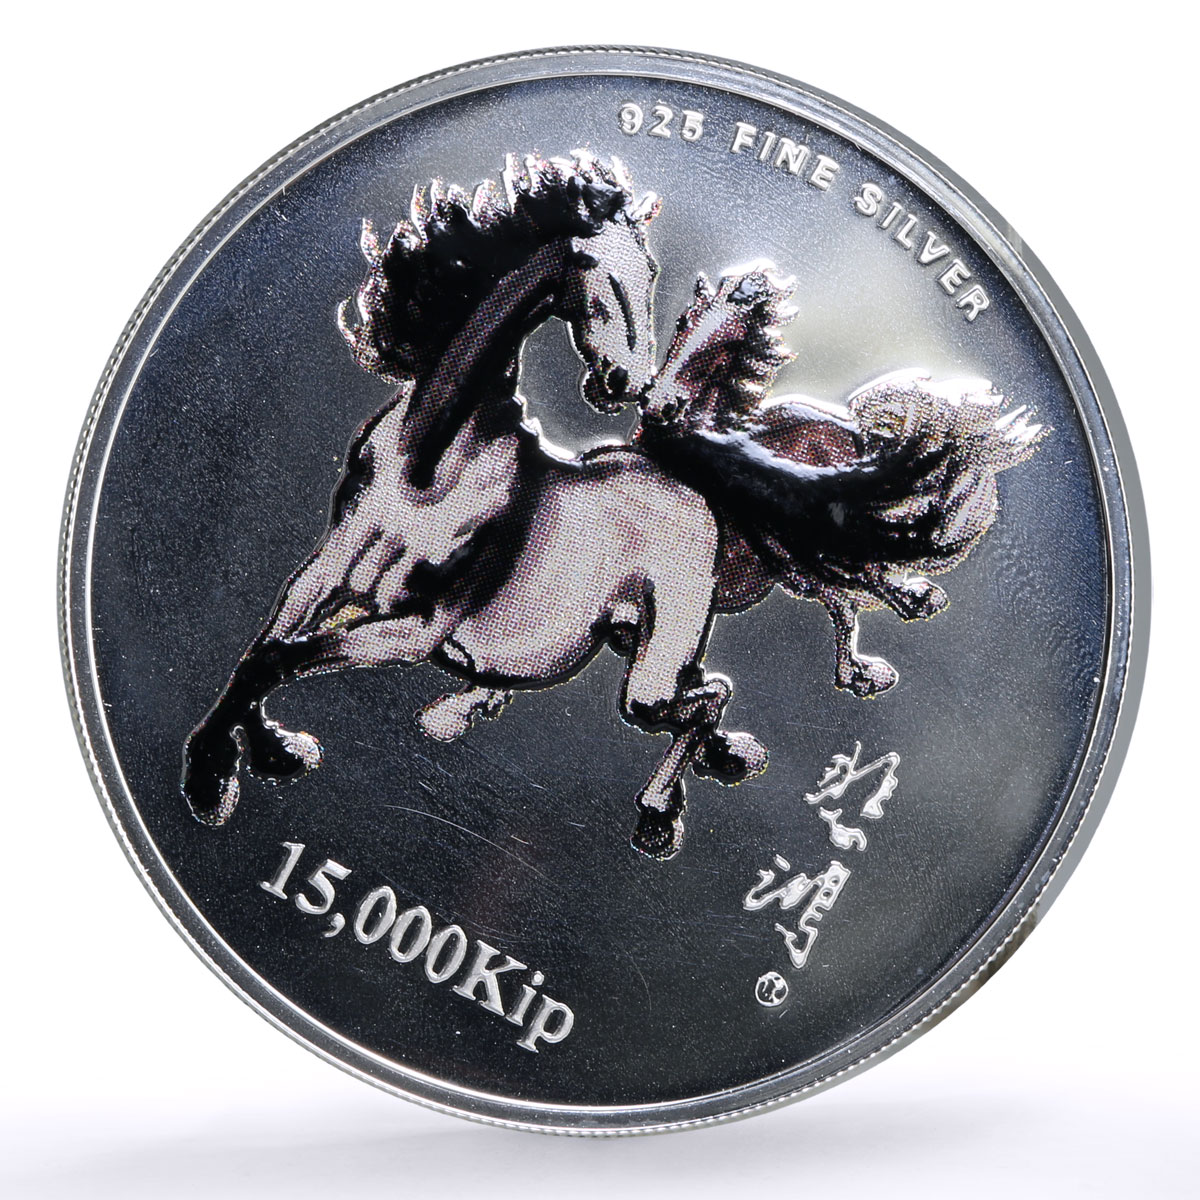 Laos 15000 kip Lunar Calendar Year of the Horse Two Horses silver coin 2002